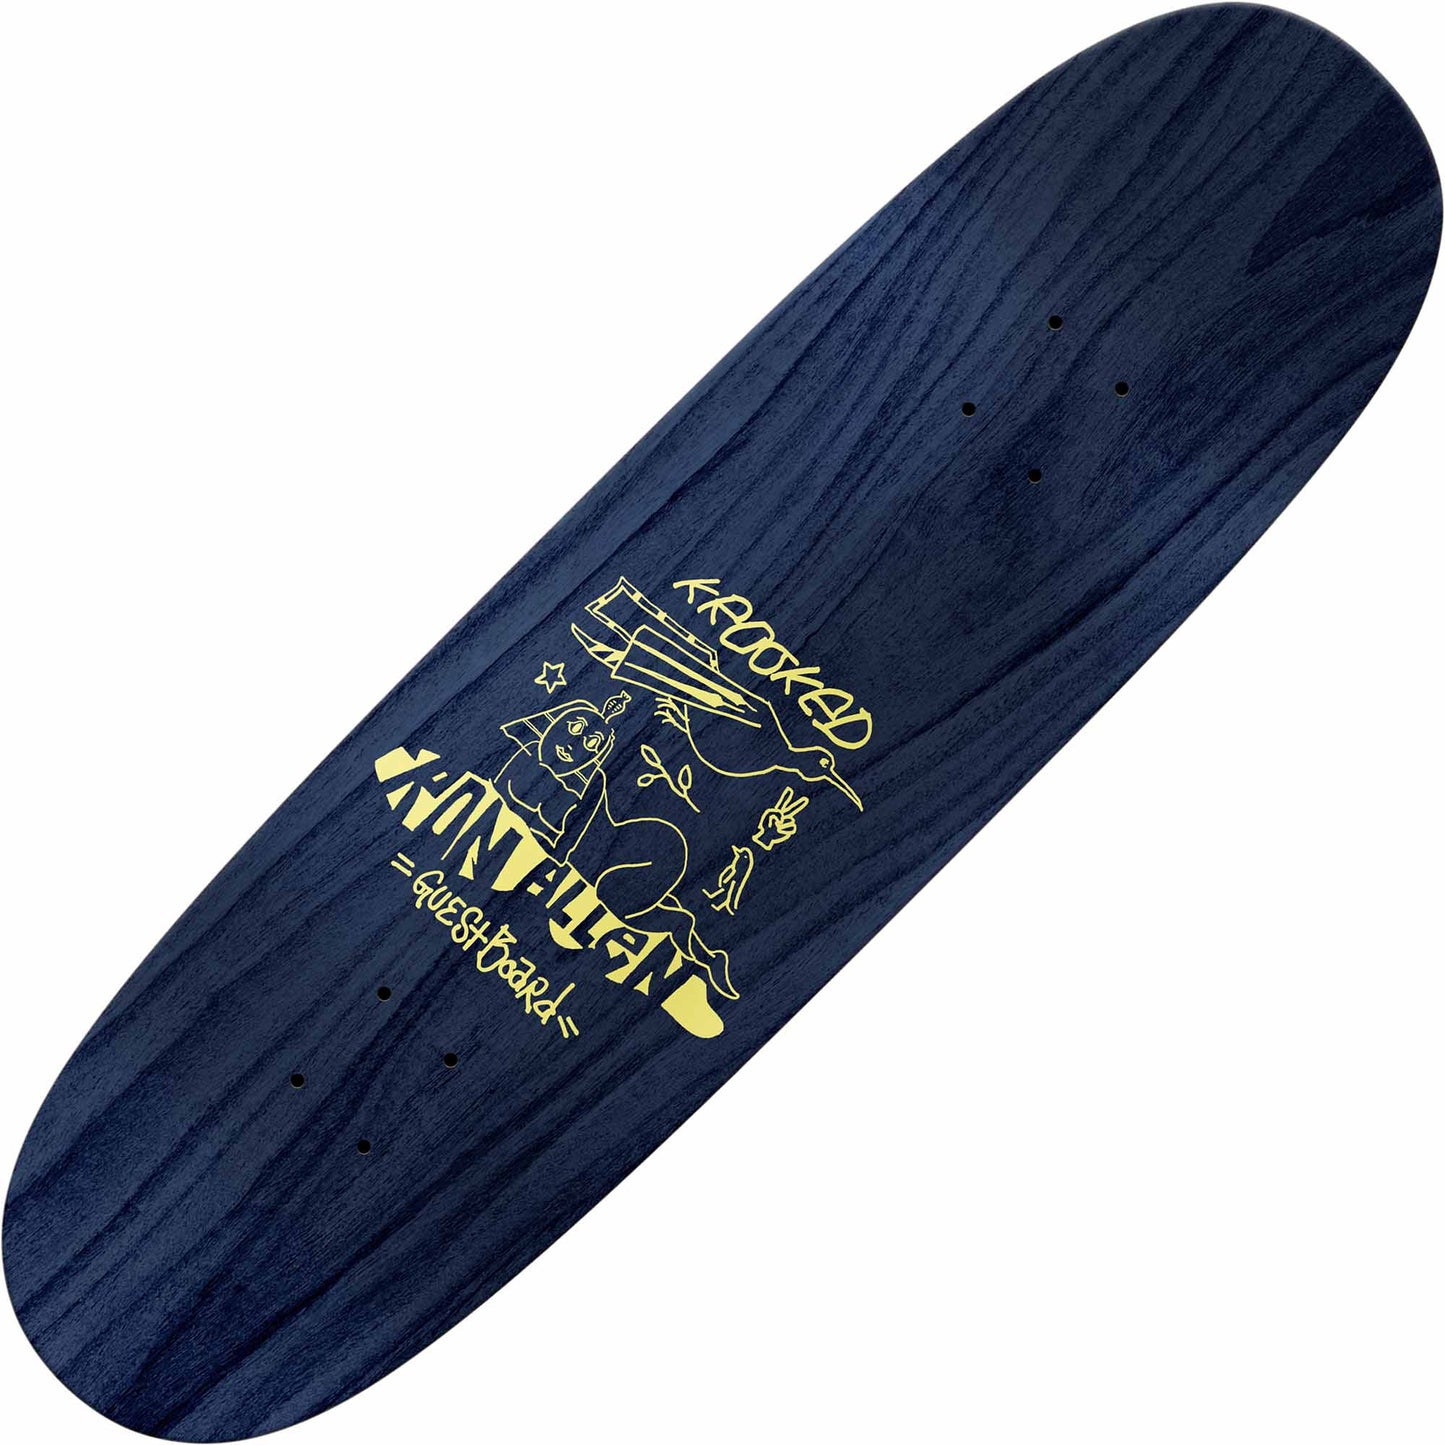 Krooked Ron Allen Guest Pro Deck (8.75") - Tiki Room Skateboards - 2